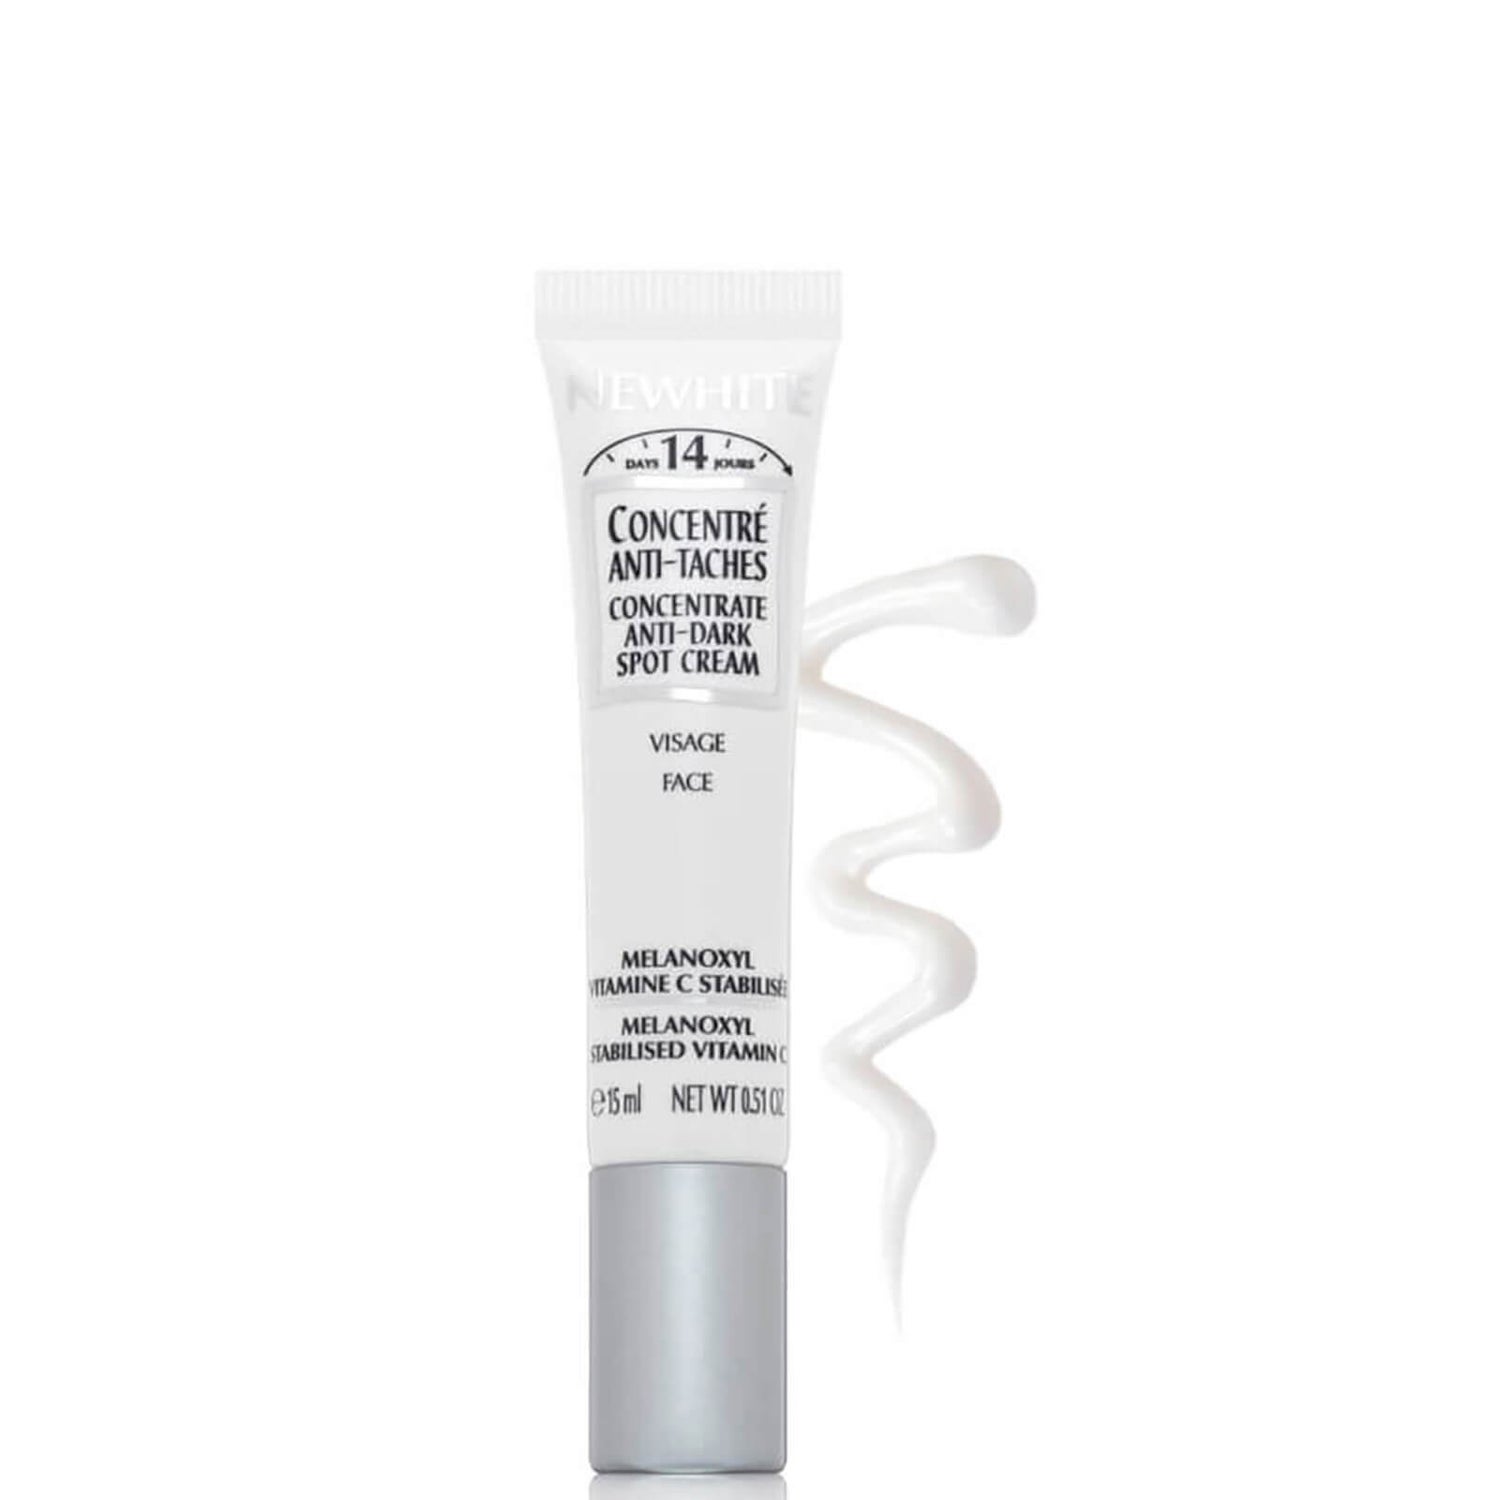 Guinot Newhite Anti-Dark Spot Cream Concentrate (0.51 oz.)